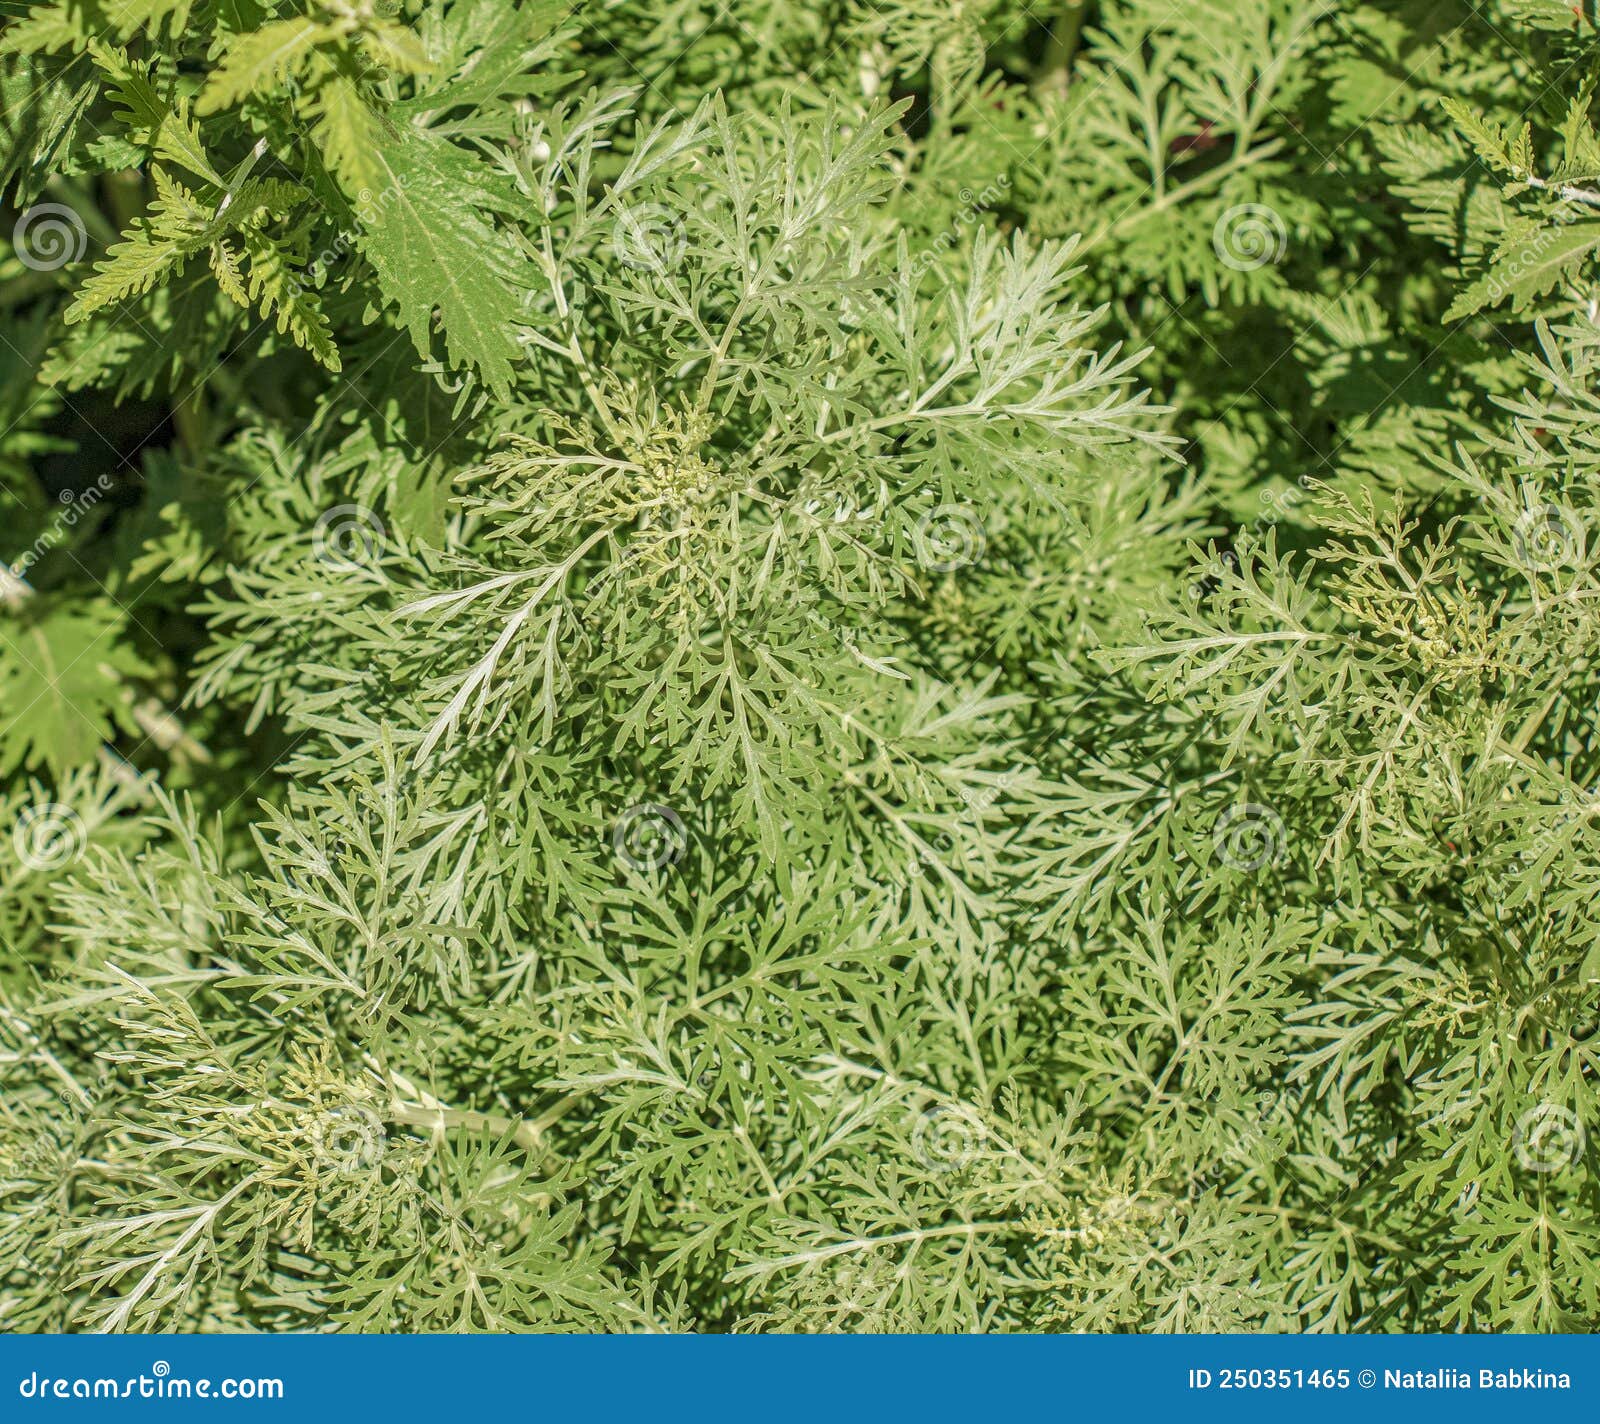 Artemisia annua - Sweet wormwood